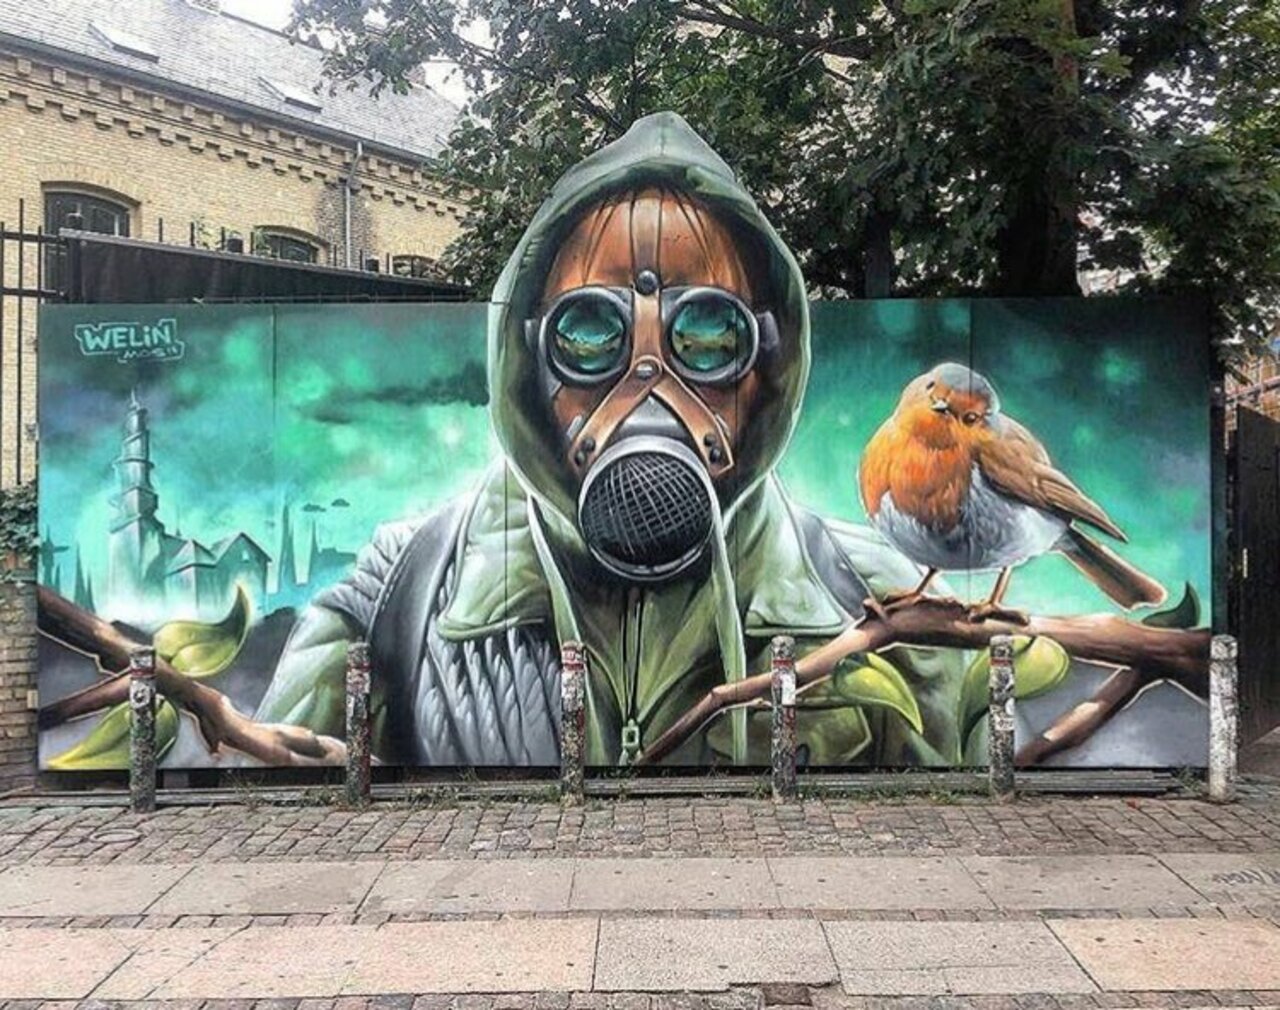 New Street Art by Welin found in Copenhagen for the MeetingOfStyles #art #graffiti #mural #streetart https://t.co/vD9W9vDltB